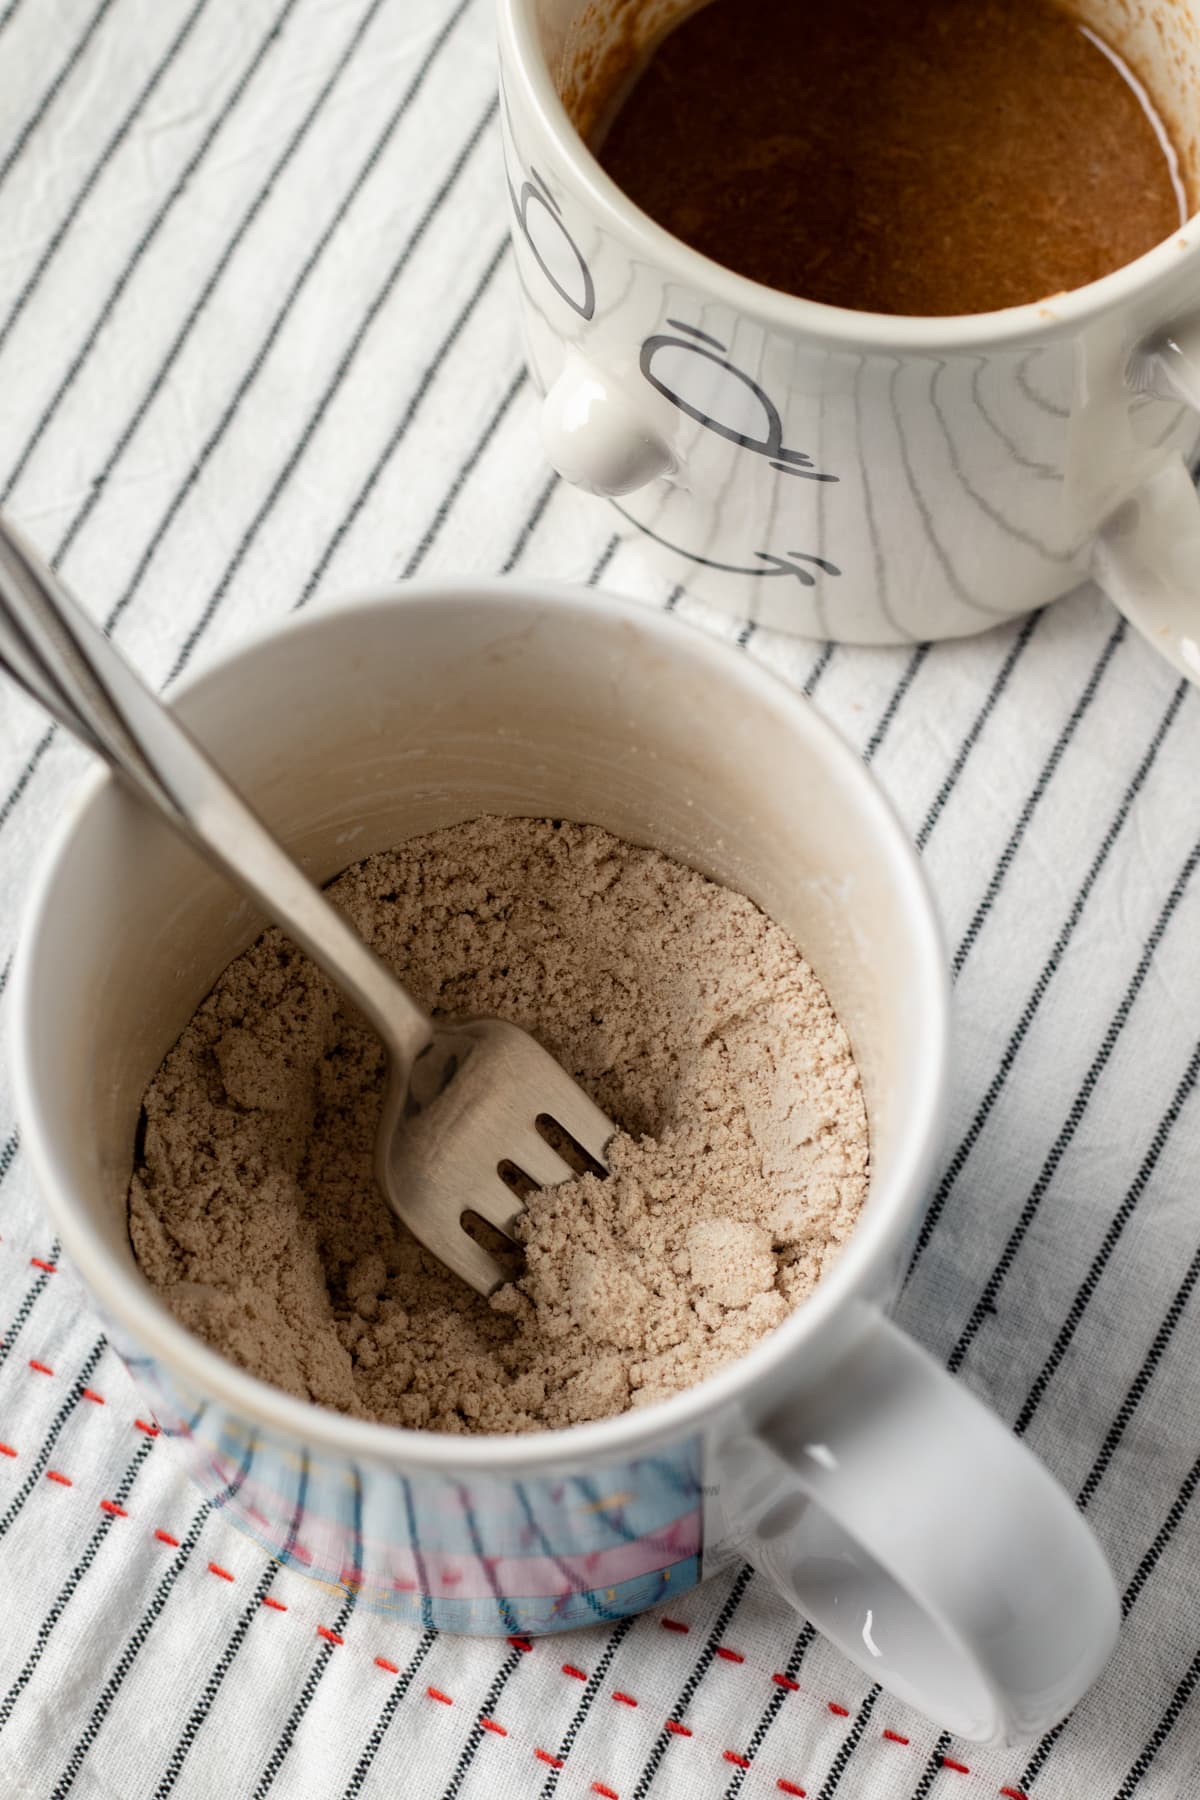 stirring together dry ingredients in a mug.